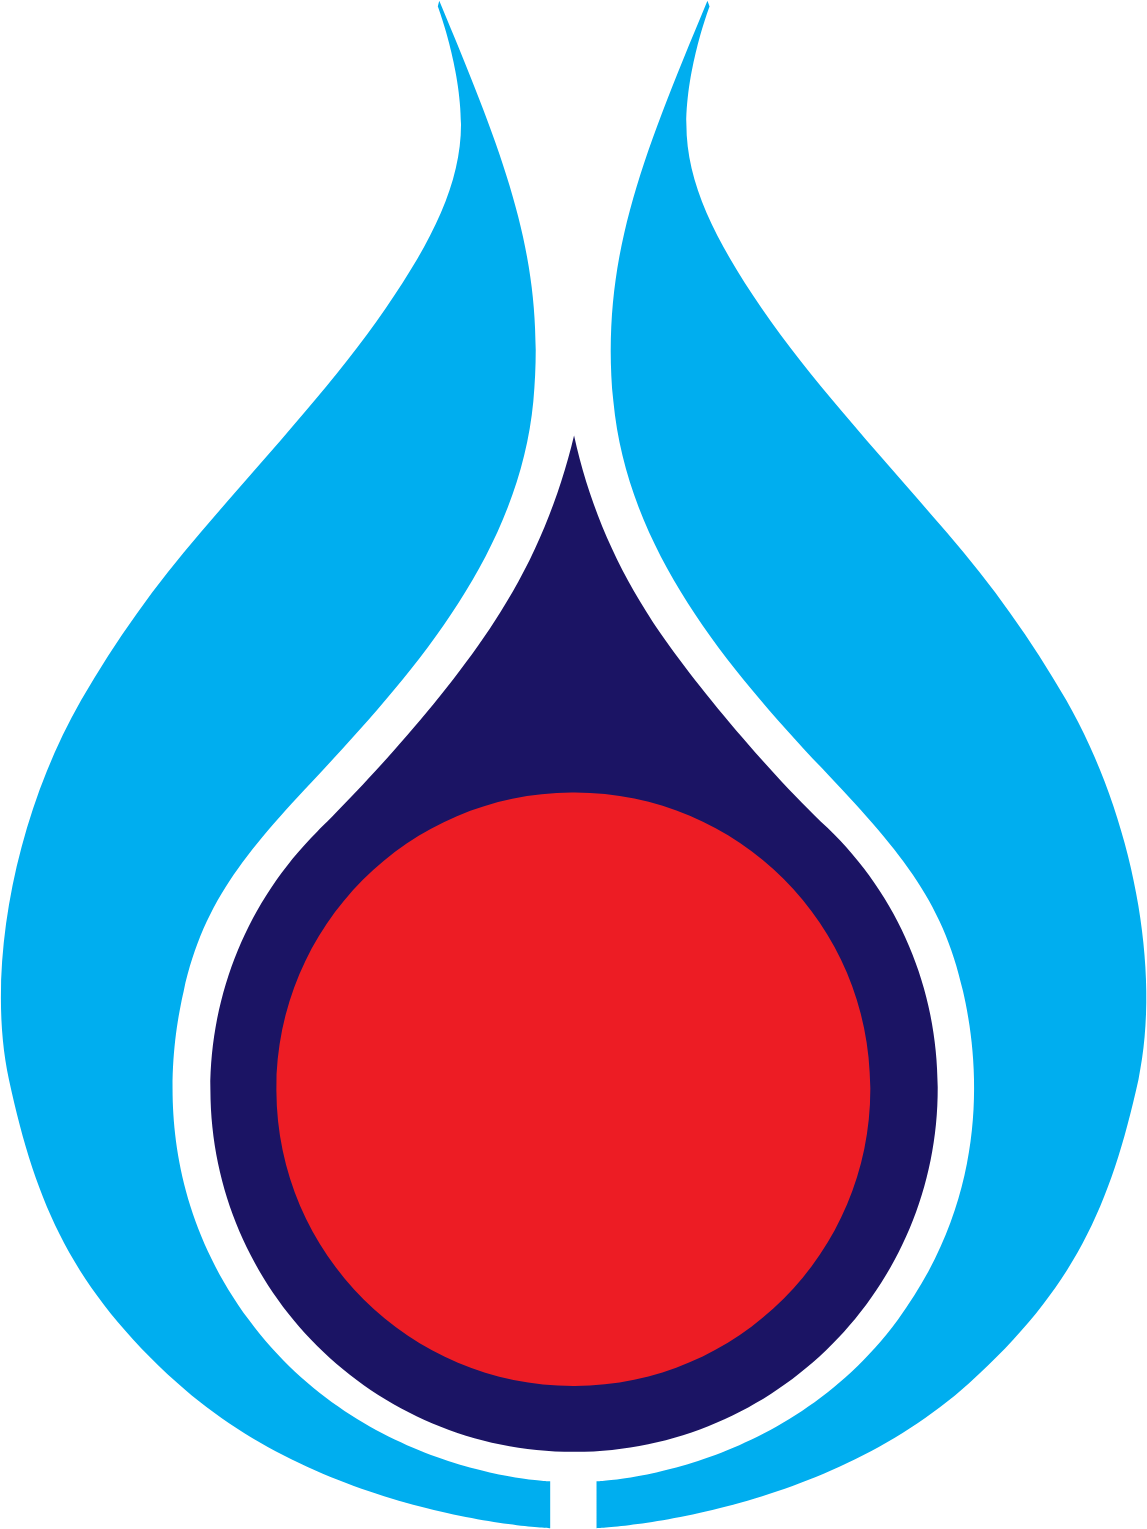 PTT Global Chemical logo (PNG transparent)